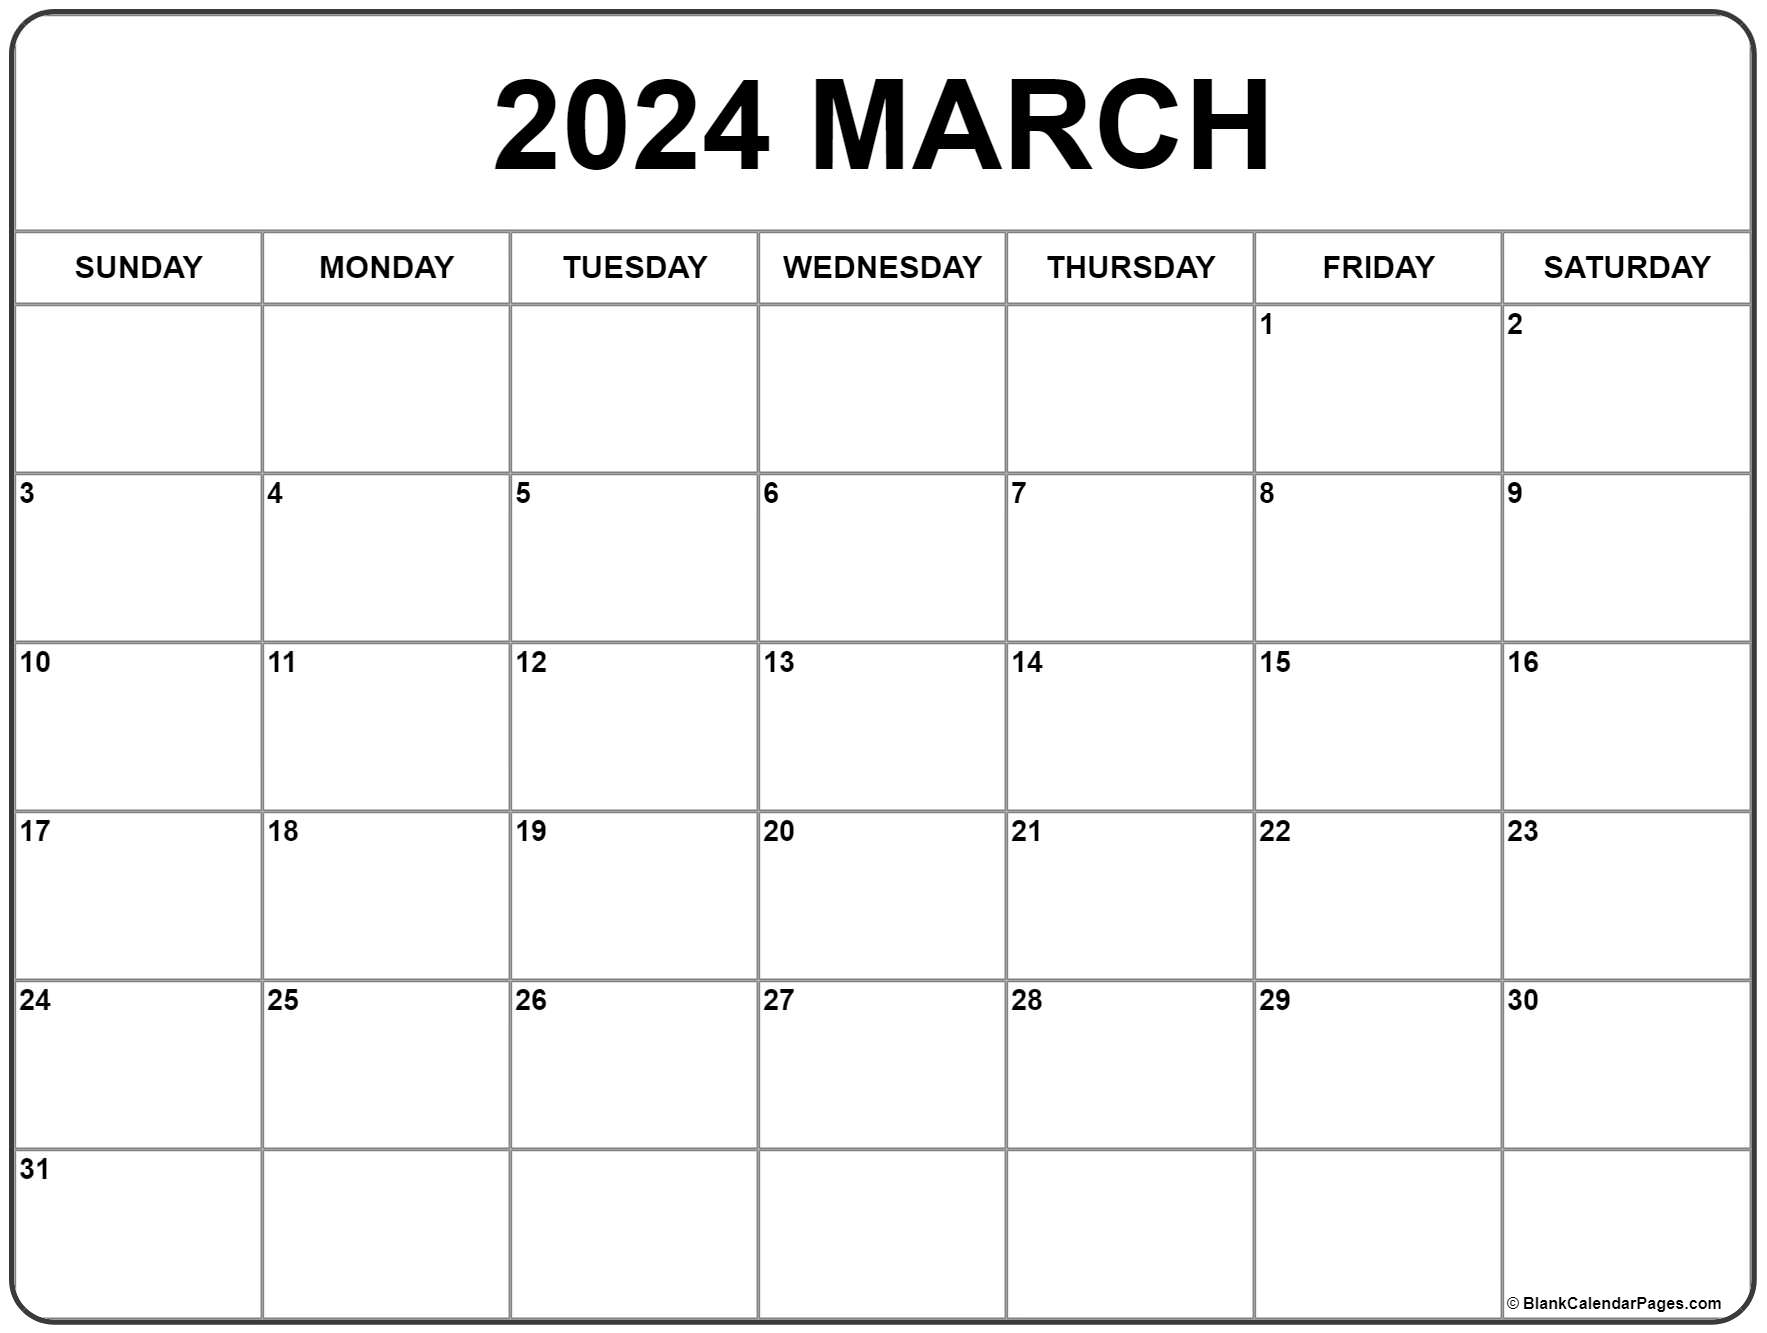 March Printable Calendar 2021 March 2021 calendar | free printable monthly calendars